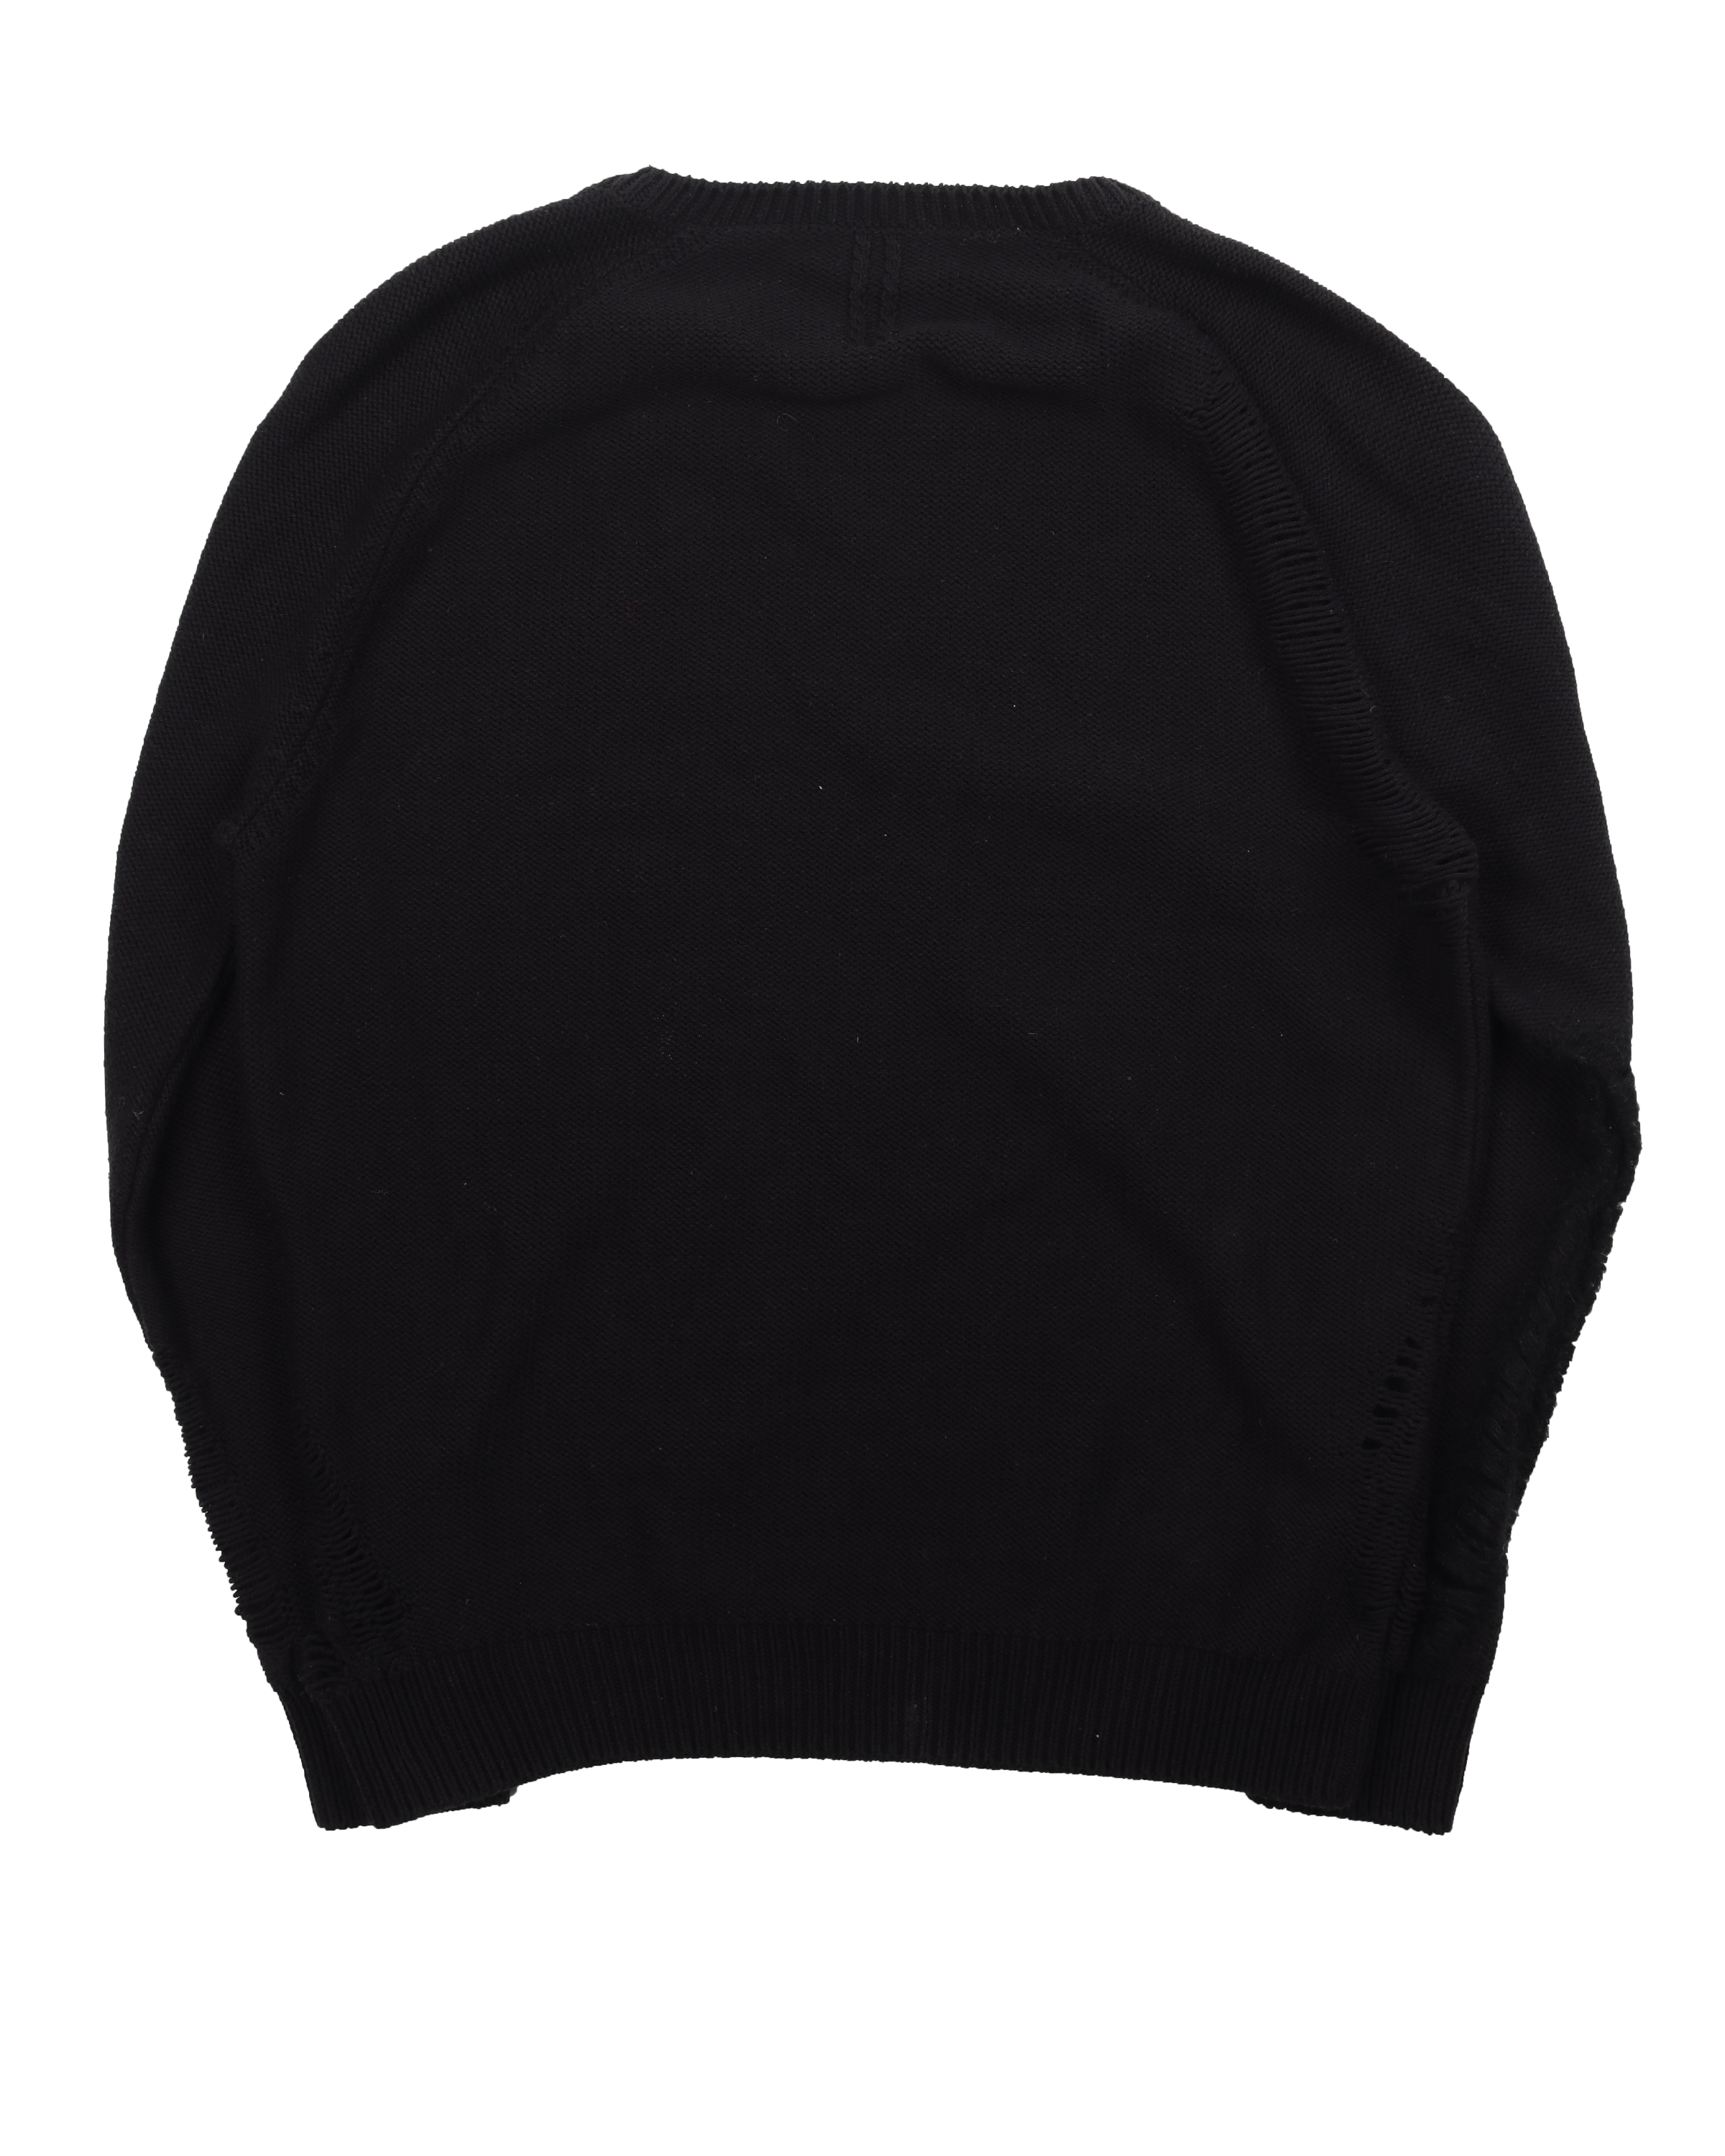 Distressed Black Knit Sweater (2015)